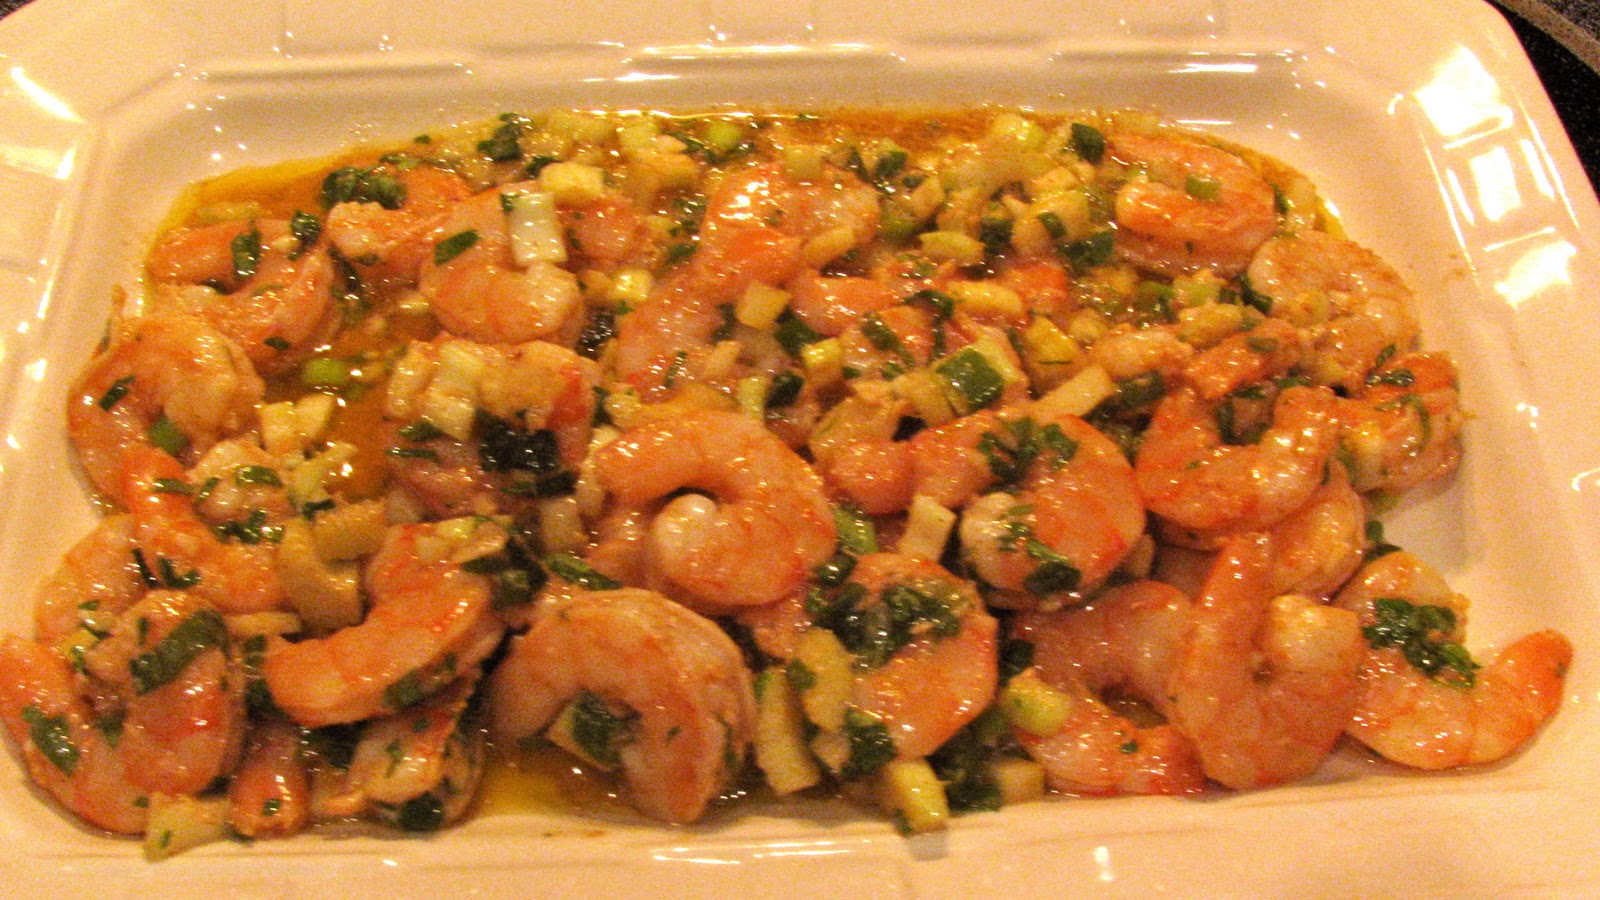 Rita's Recipes: Marinated Shrimp